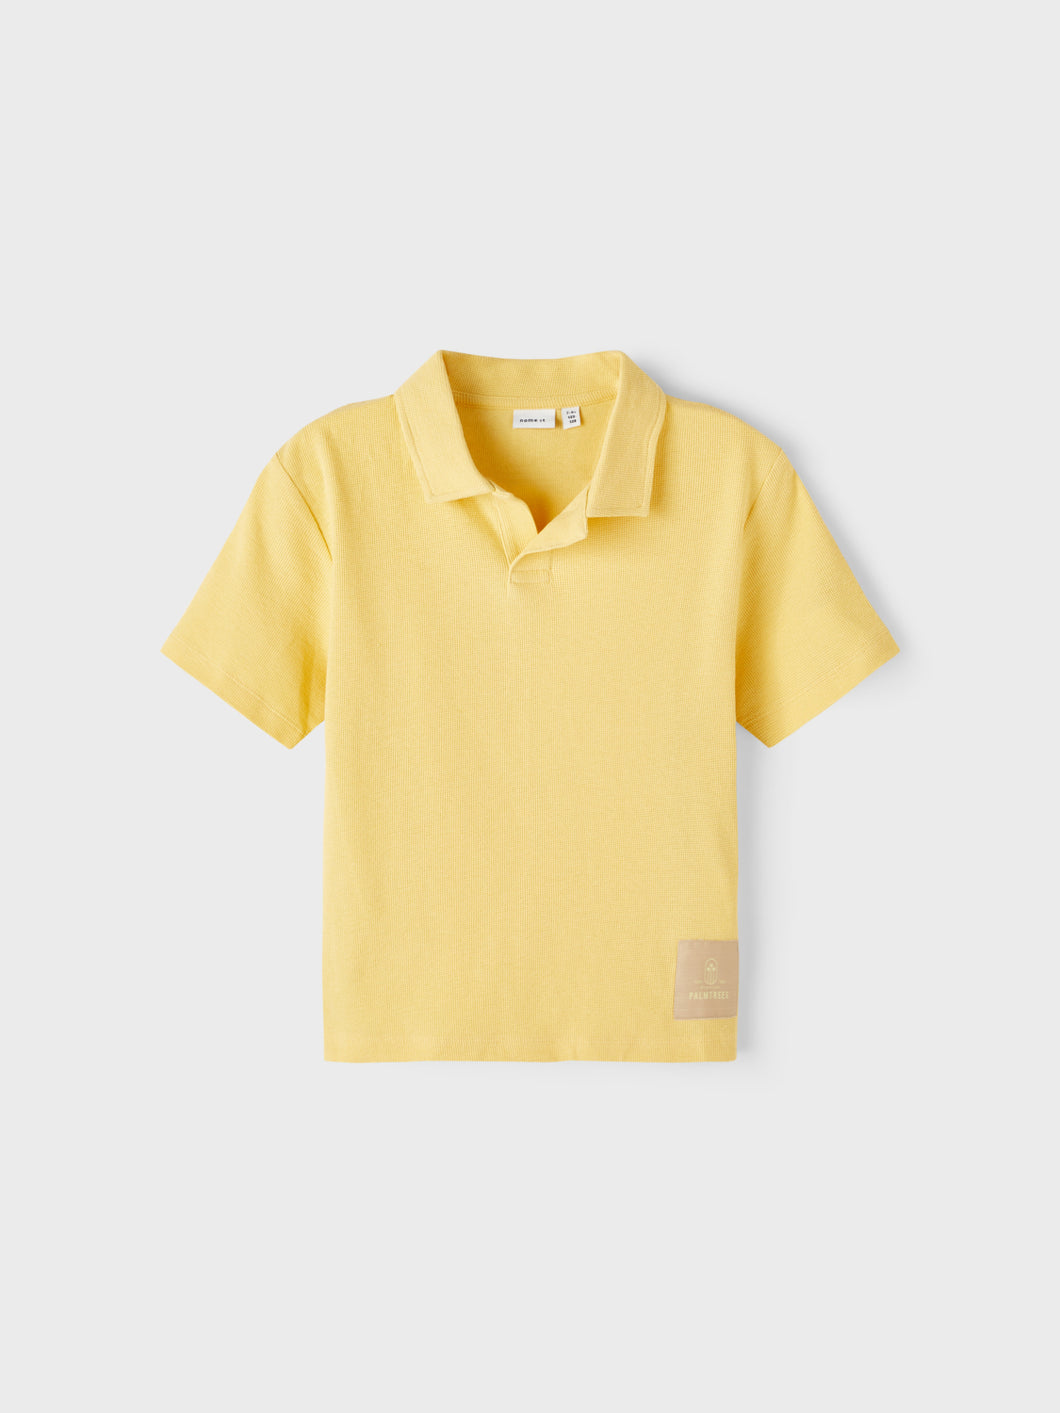 NKMHEJGIL T-Shirts & Tops - Sundress